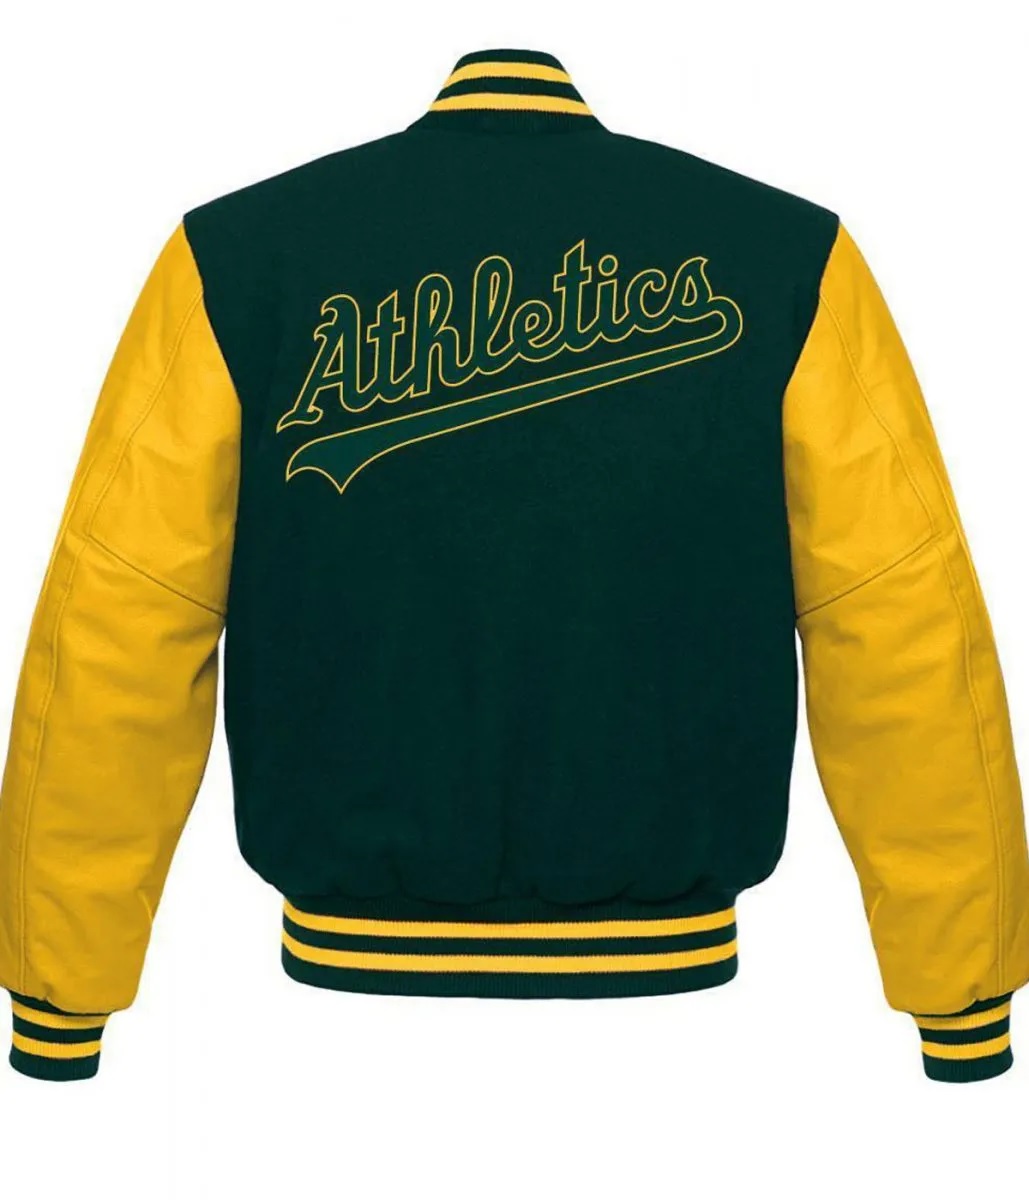 Oakland Athletics MLB Yellow and Green Letterman Jacket